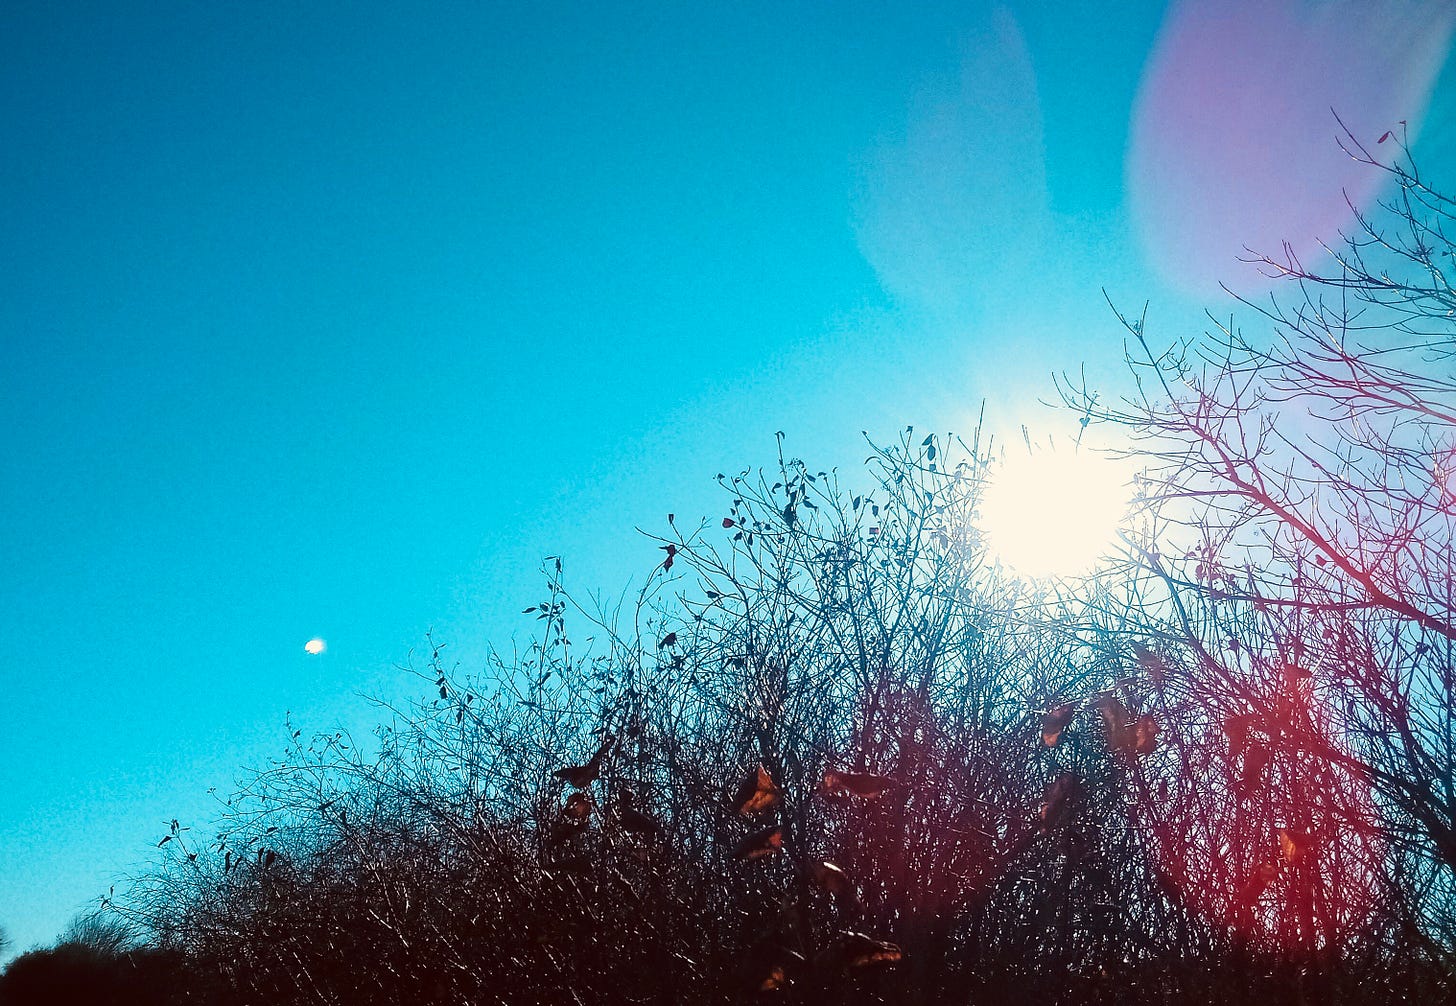 Bright sun through branches against blue sky